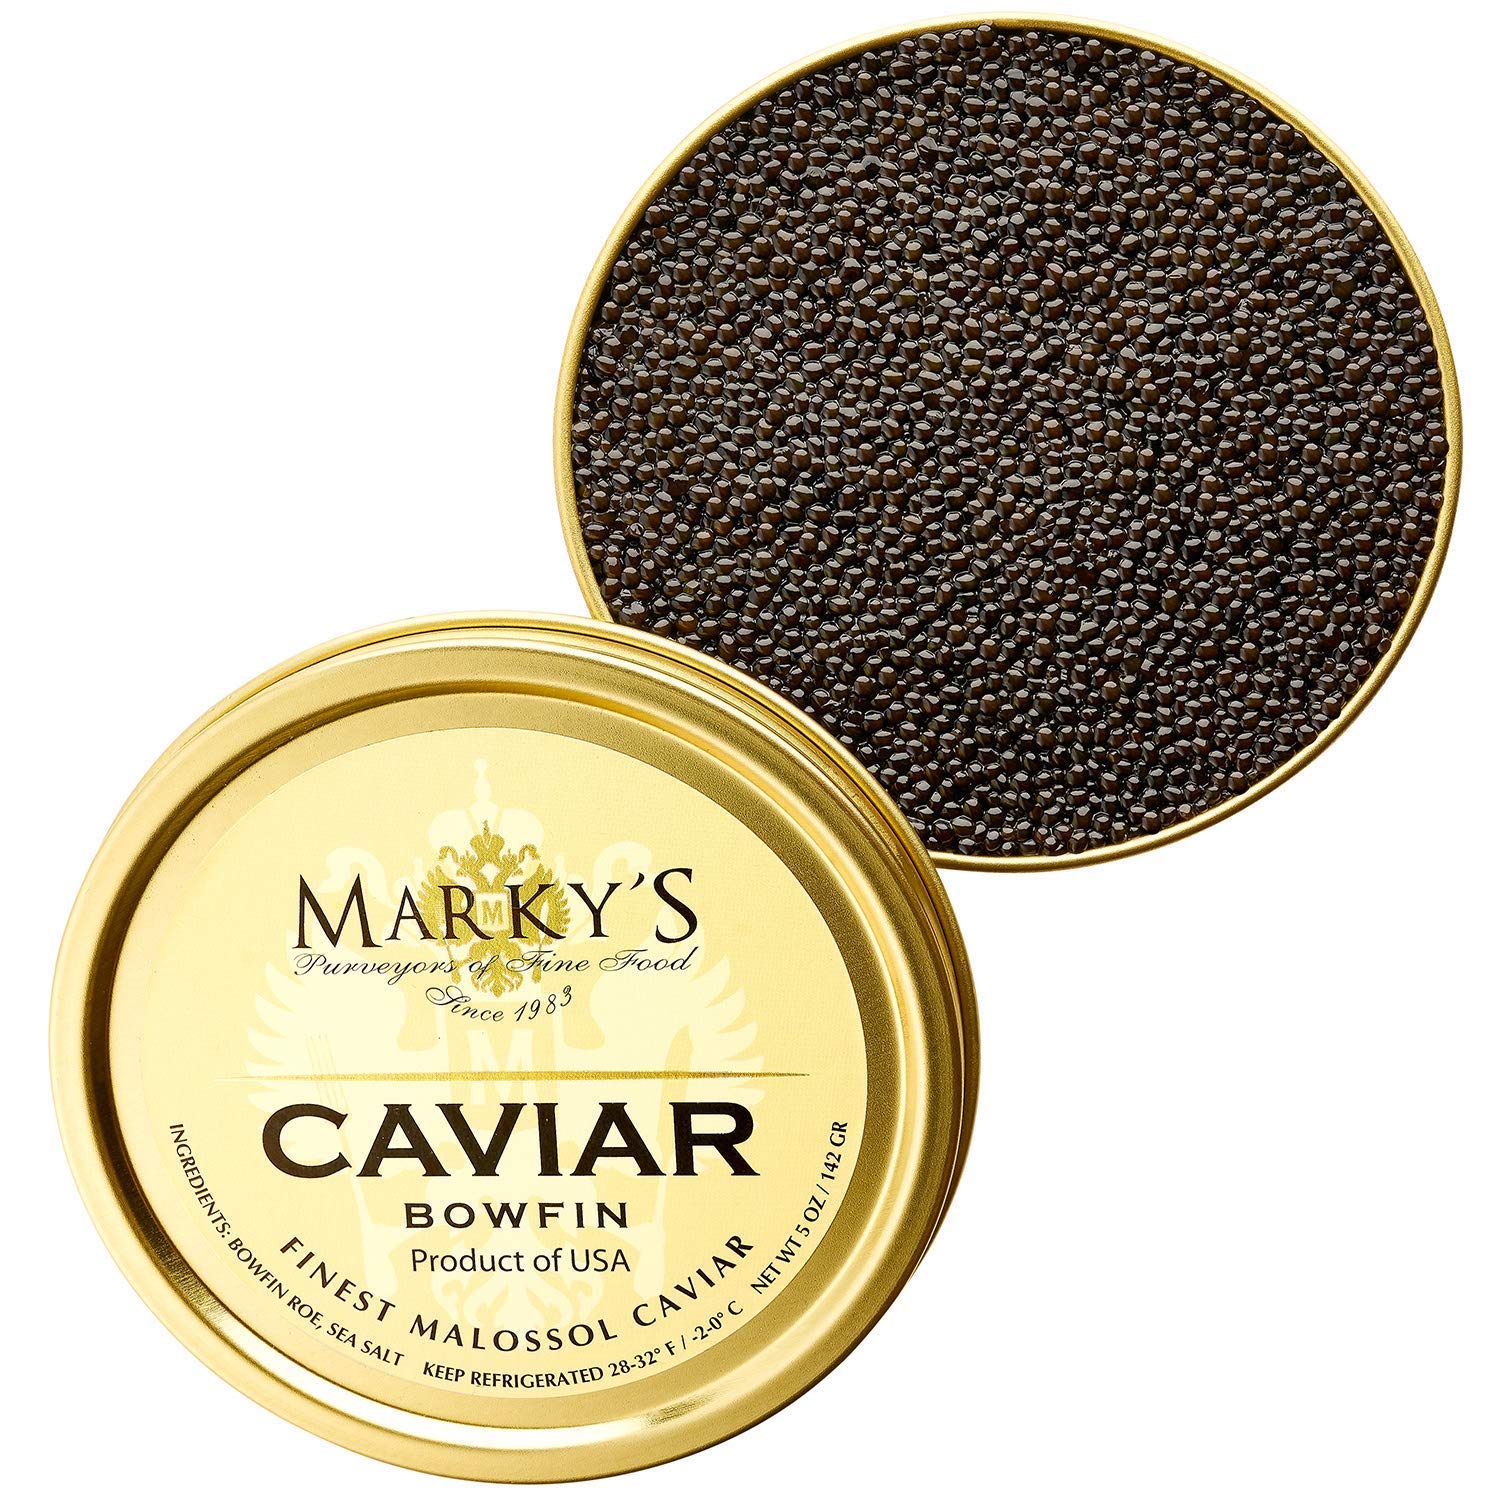 https://www.alansmarket.com/wp-content/uploads/2020/05/Caviar-Bowfin.jpg